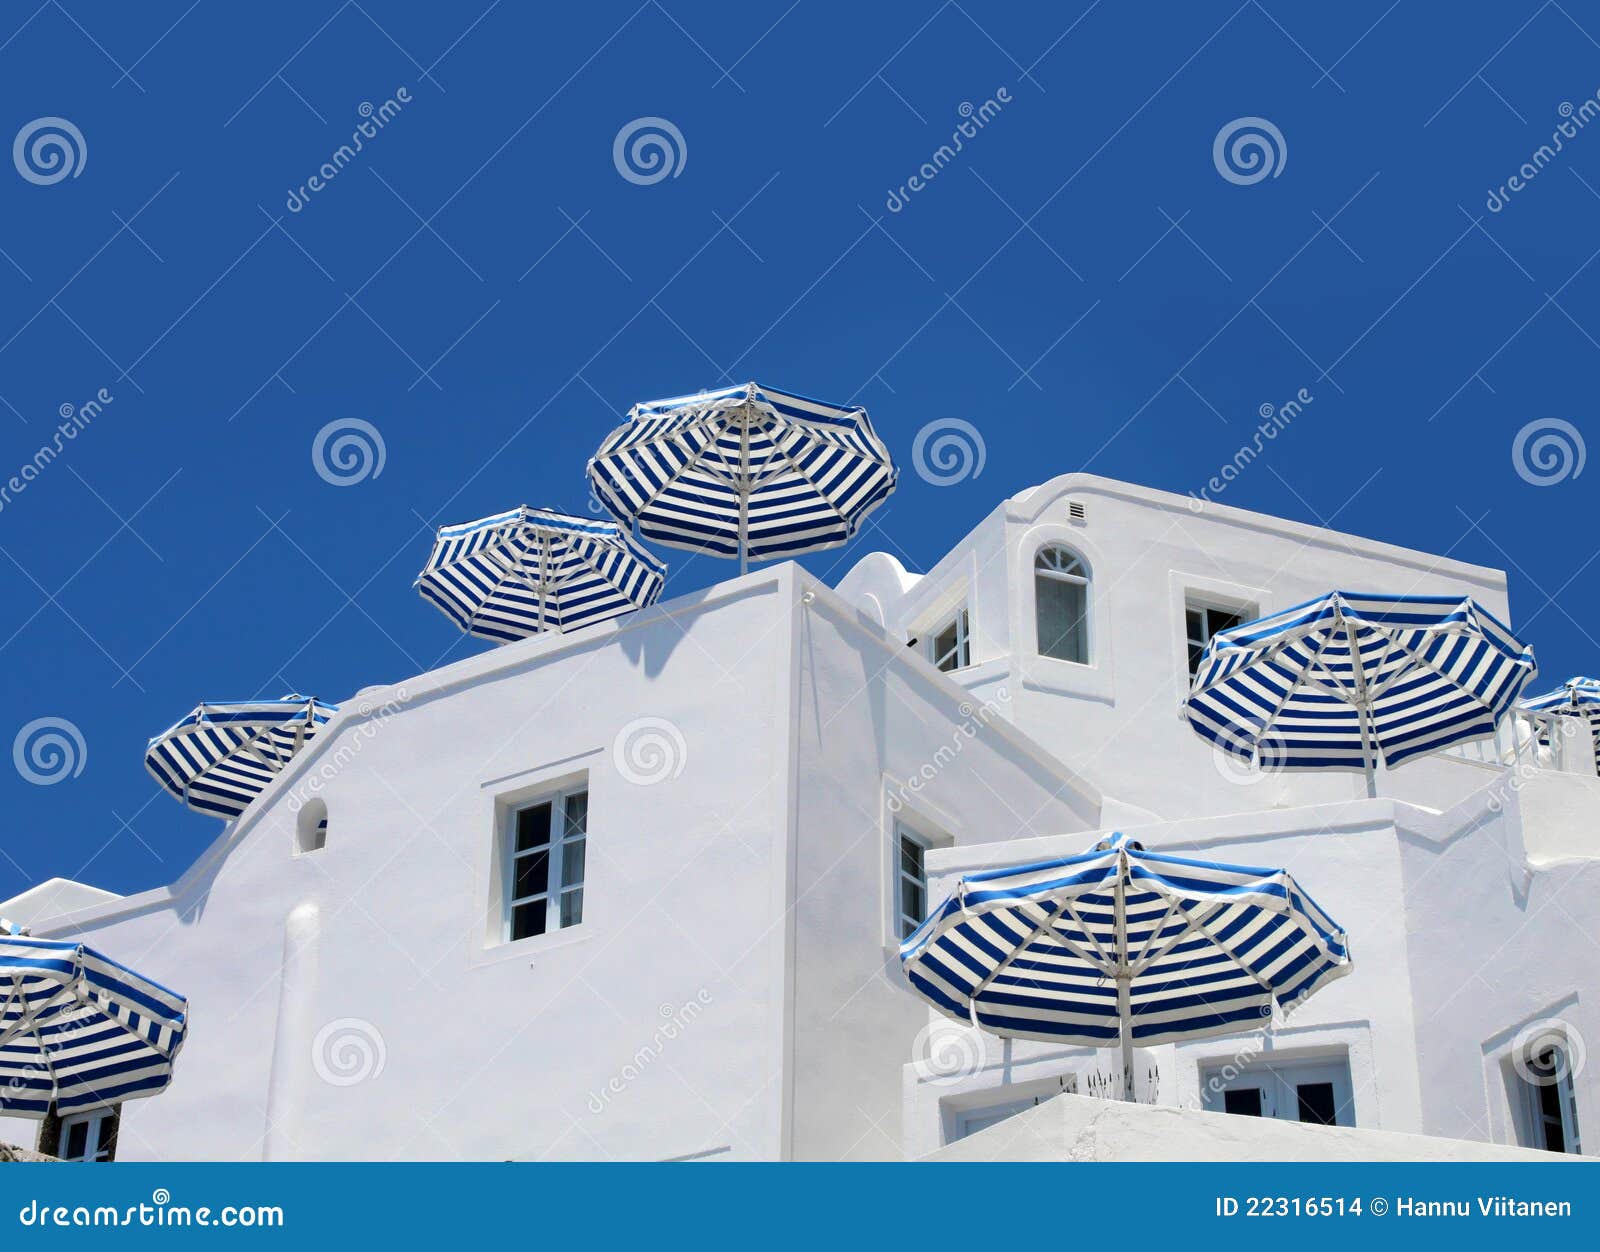 blue white sunshade umbrellas